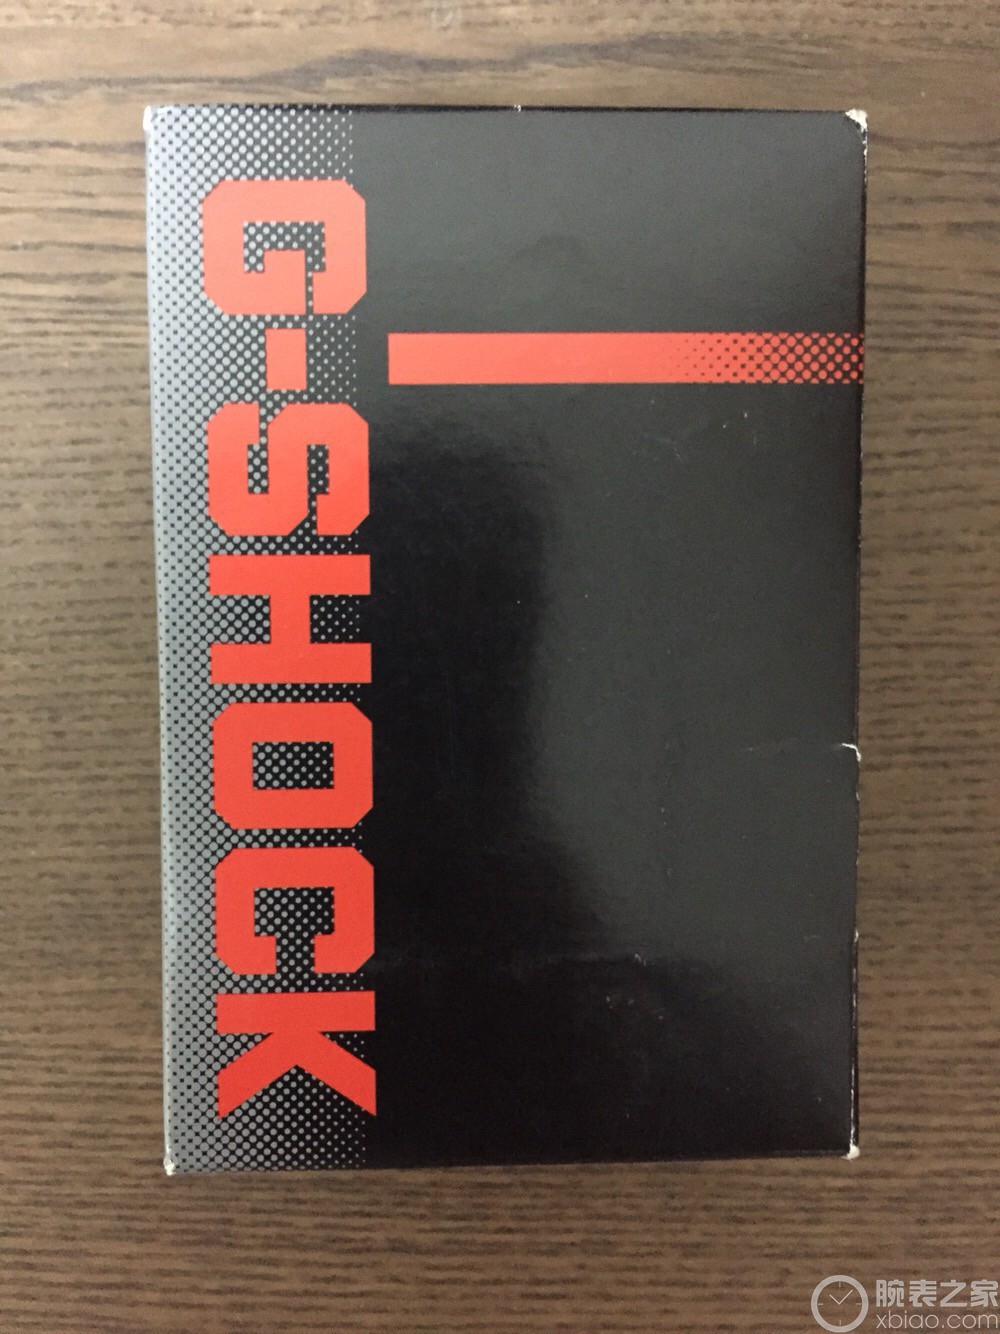 卡西歐G-SHOCK系列GW-M5610-1